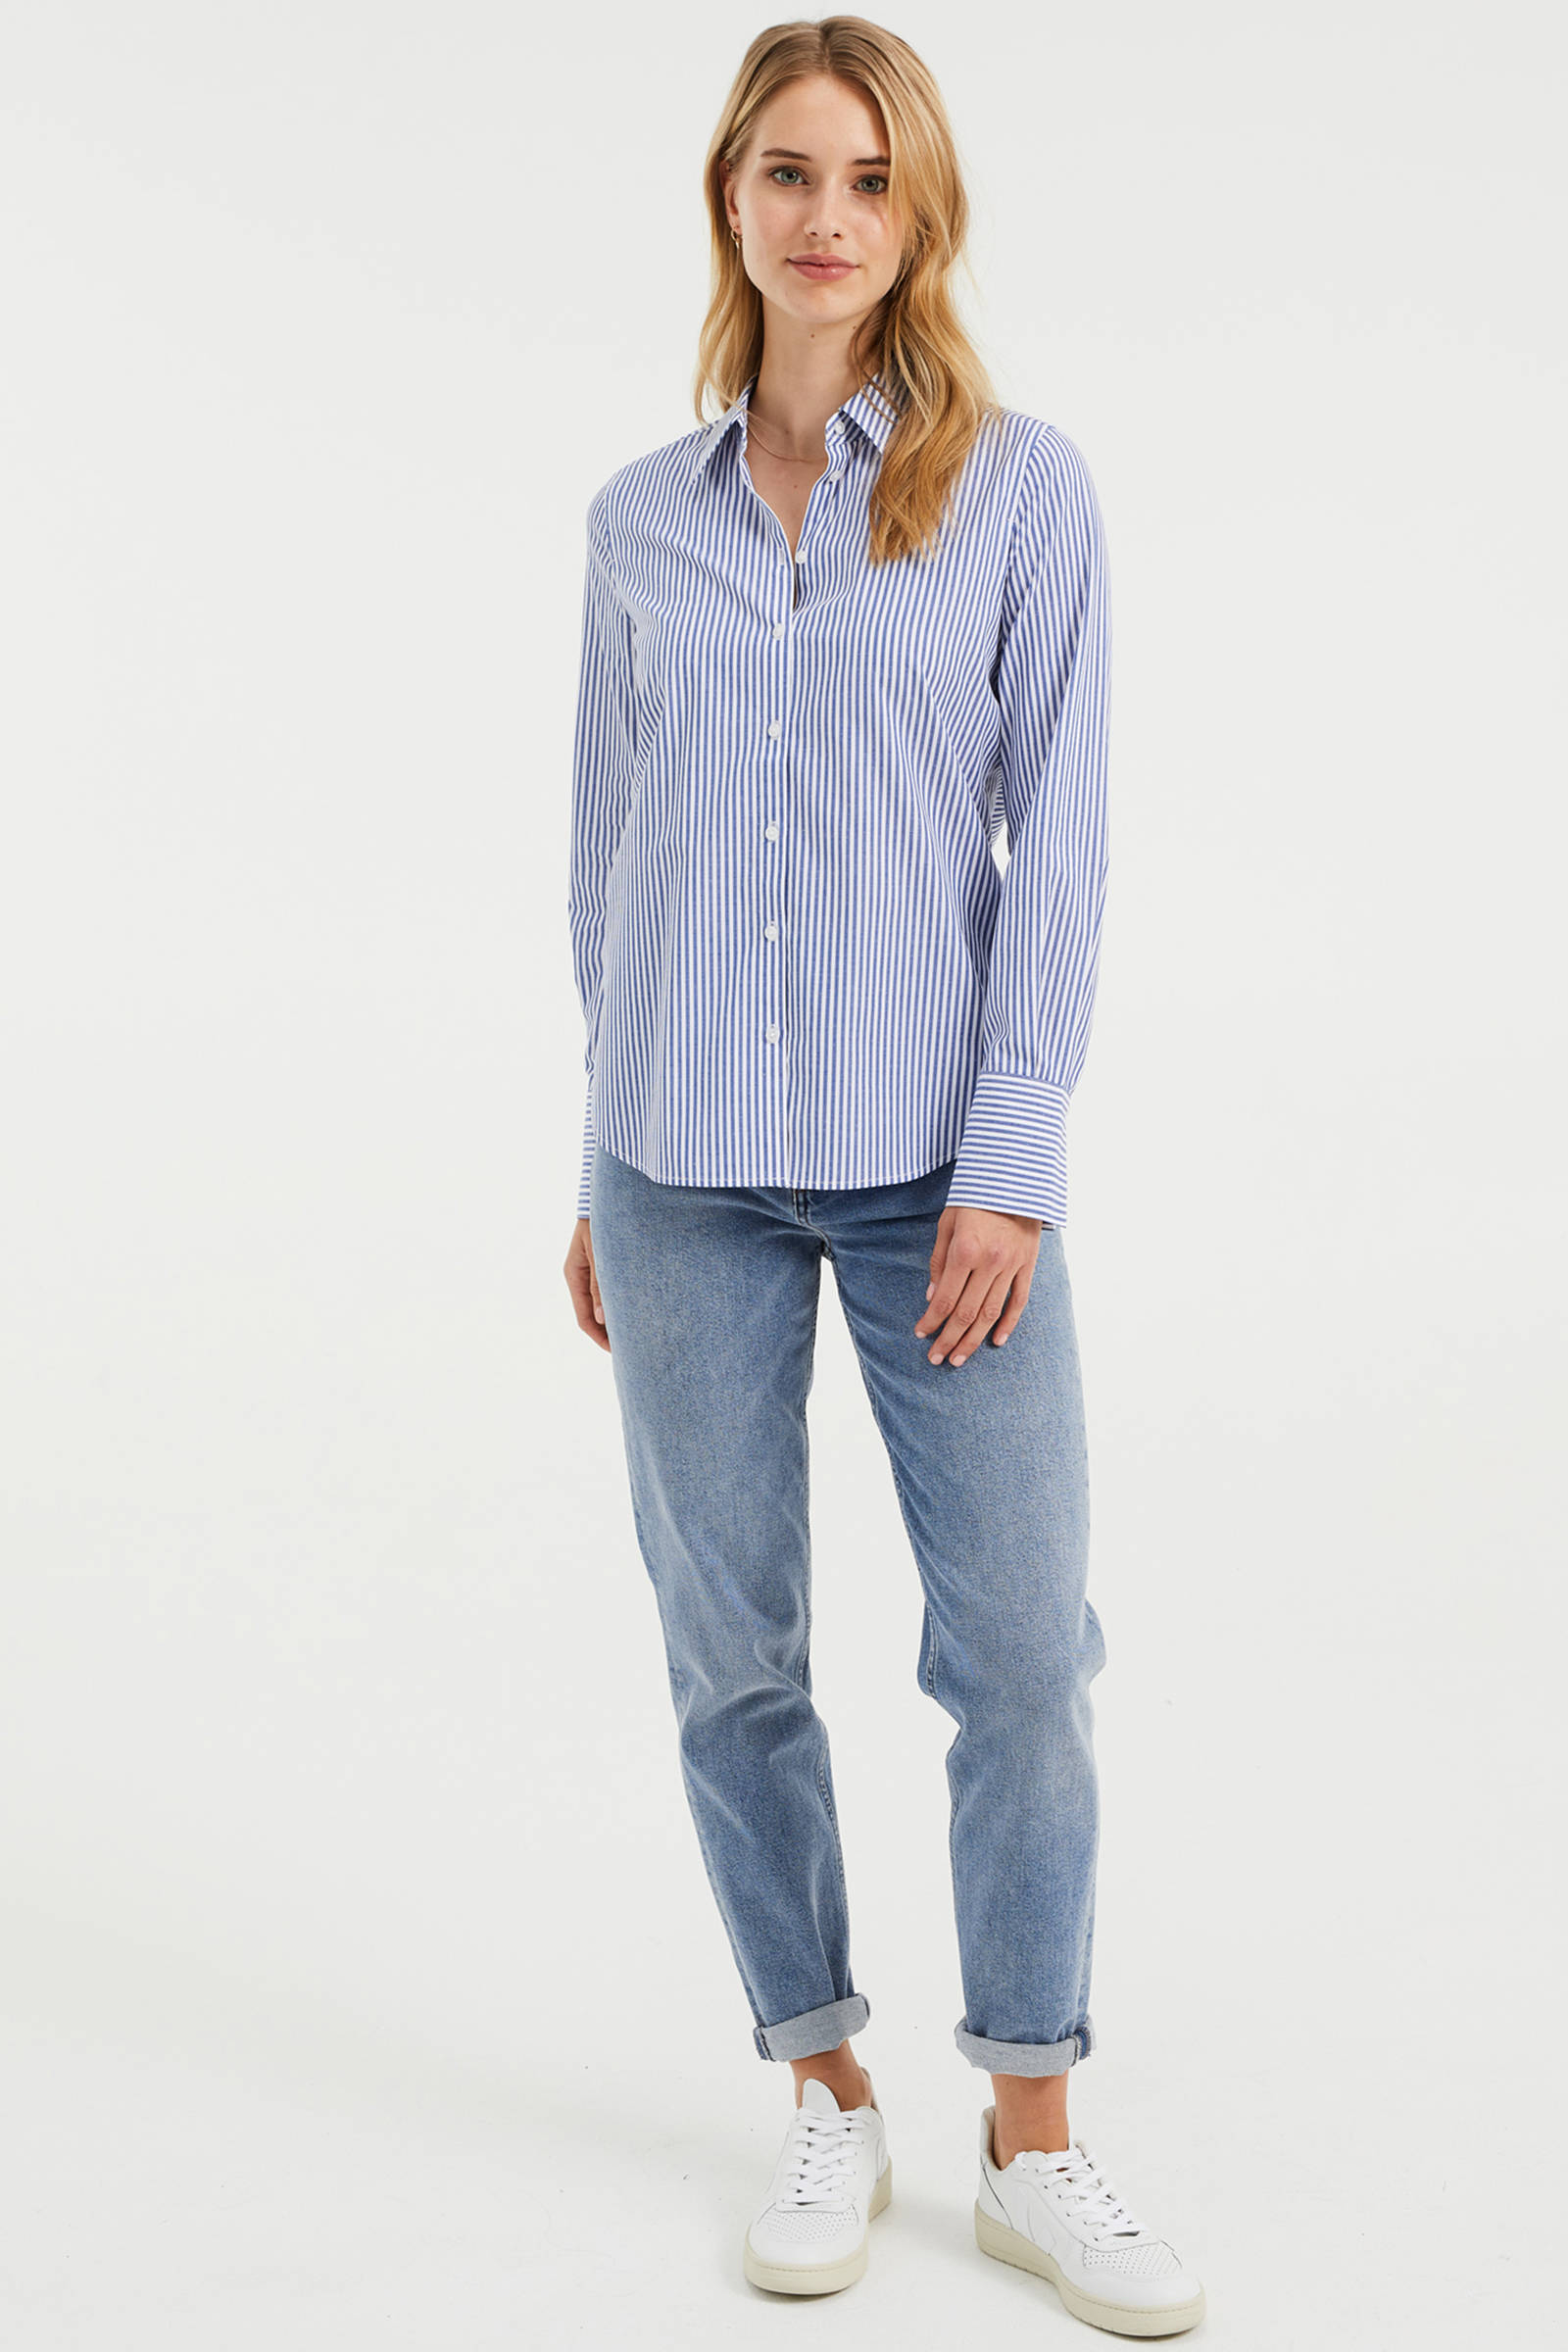 Zara Basic Oversized blouse blauw-wit gestreept patroon zakelijke stijl Mode Blouses Oversized blouses 